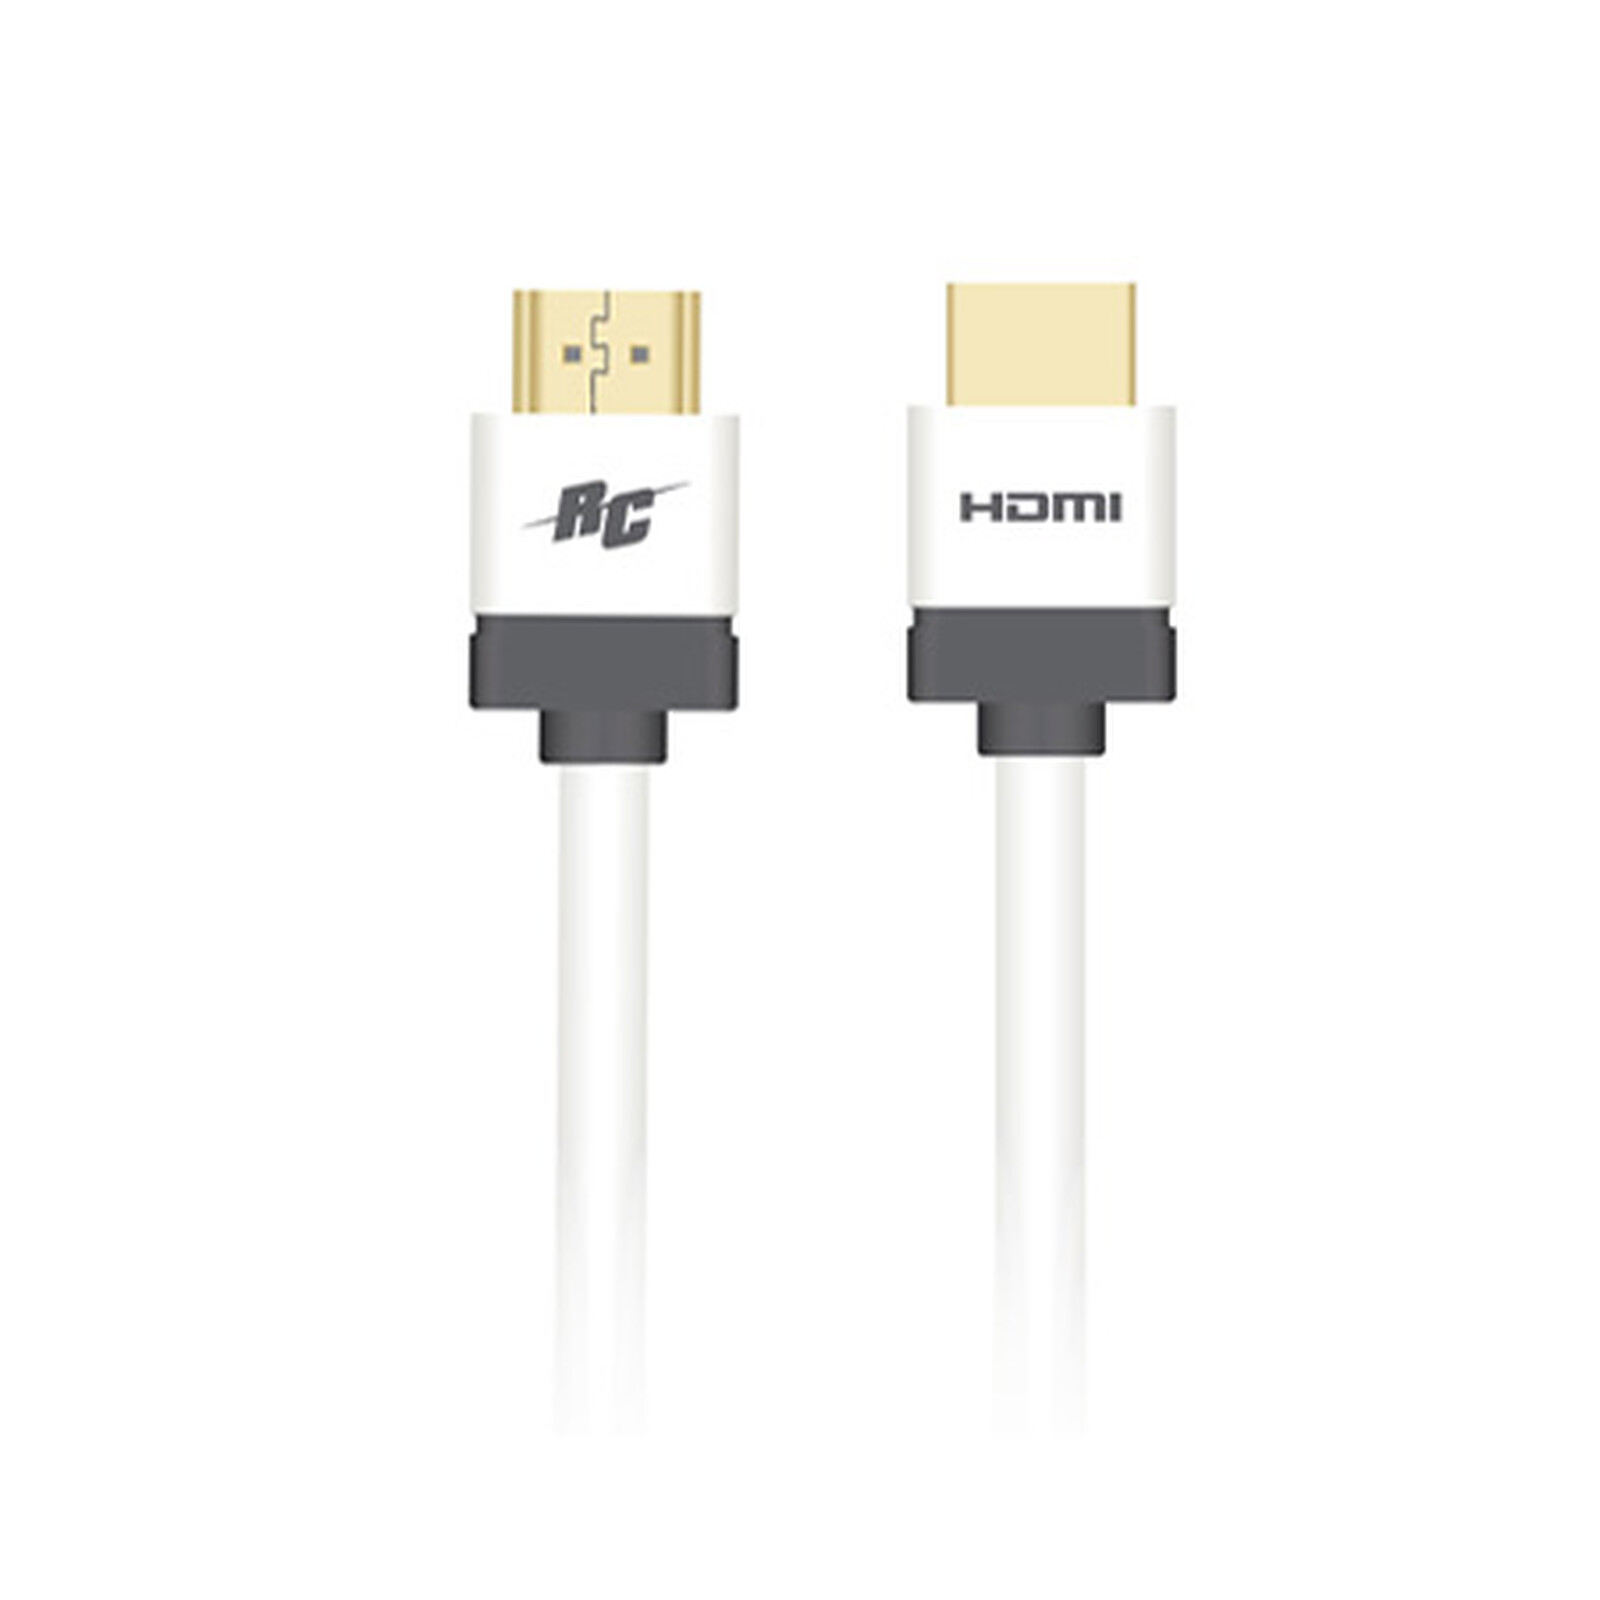 Real Cable HDMI-1 (1m) - HDMI - Garantie 3 ans LDLC